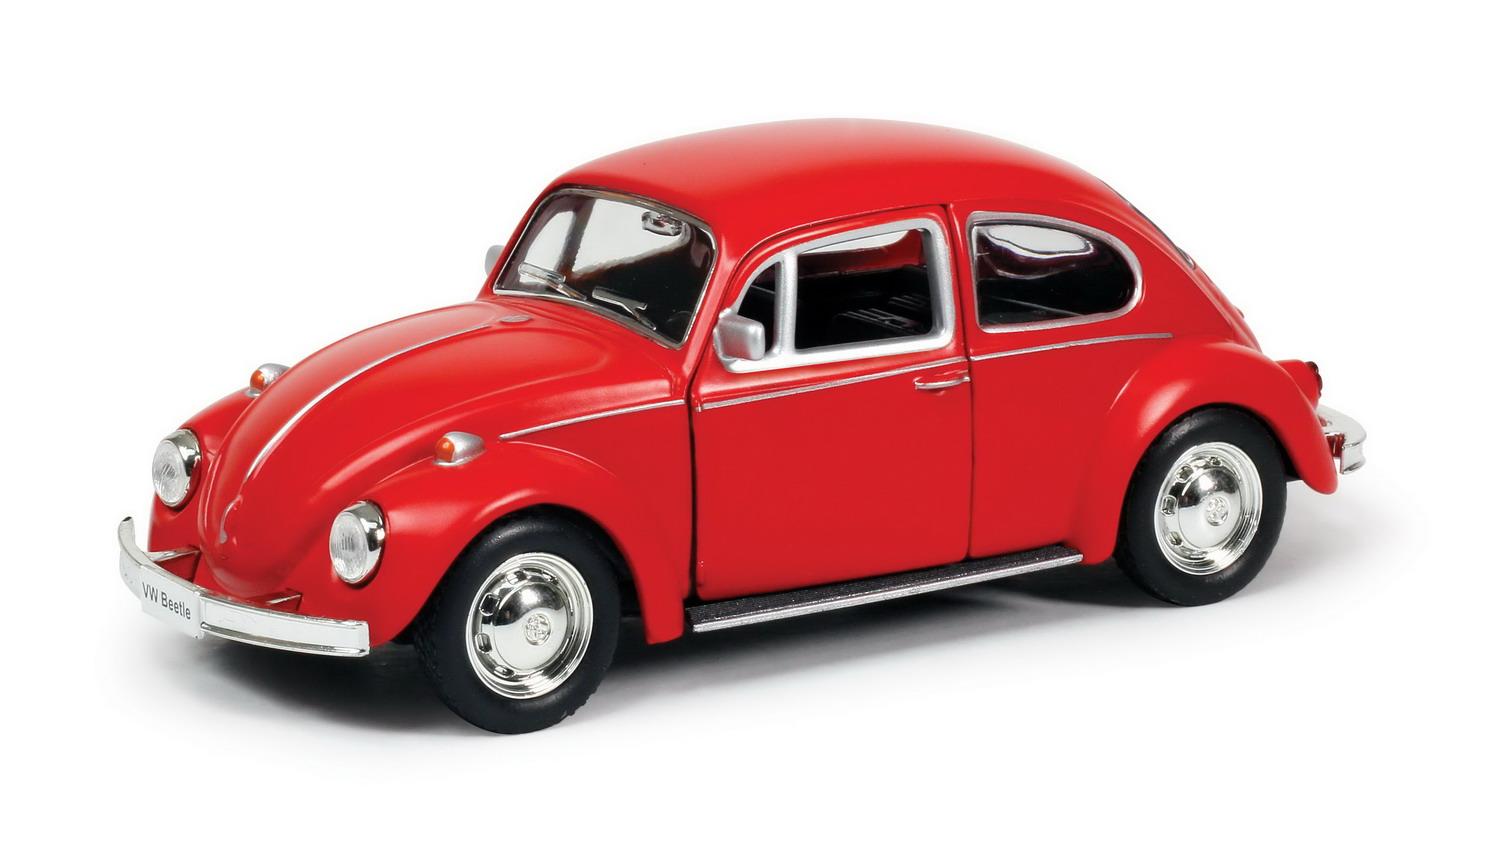 Машина металлическая RMZ City 1:32 Volkswagen Beetle 1967, красный матовый цвет maisto 1 24 volkswagen beetle alloy car model die casting static precision model collection gift toy tide play